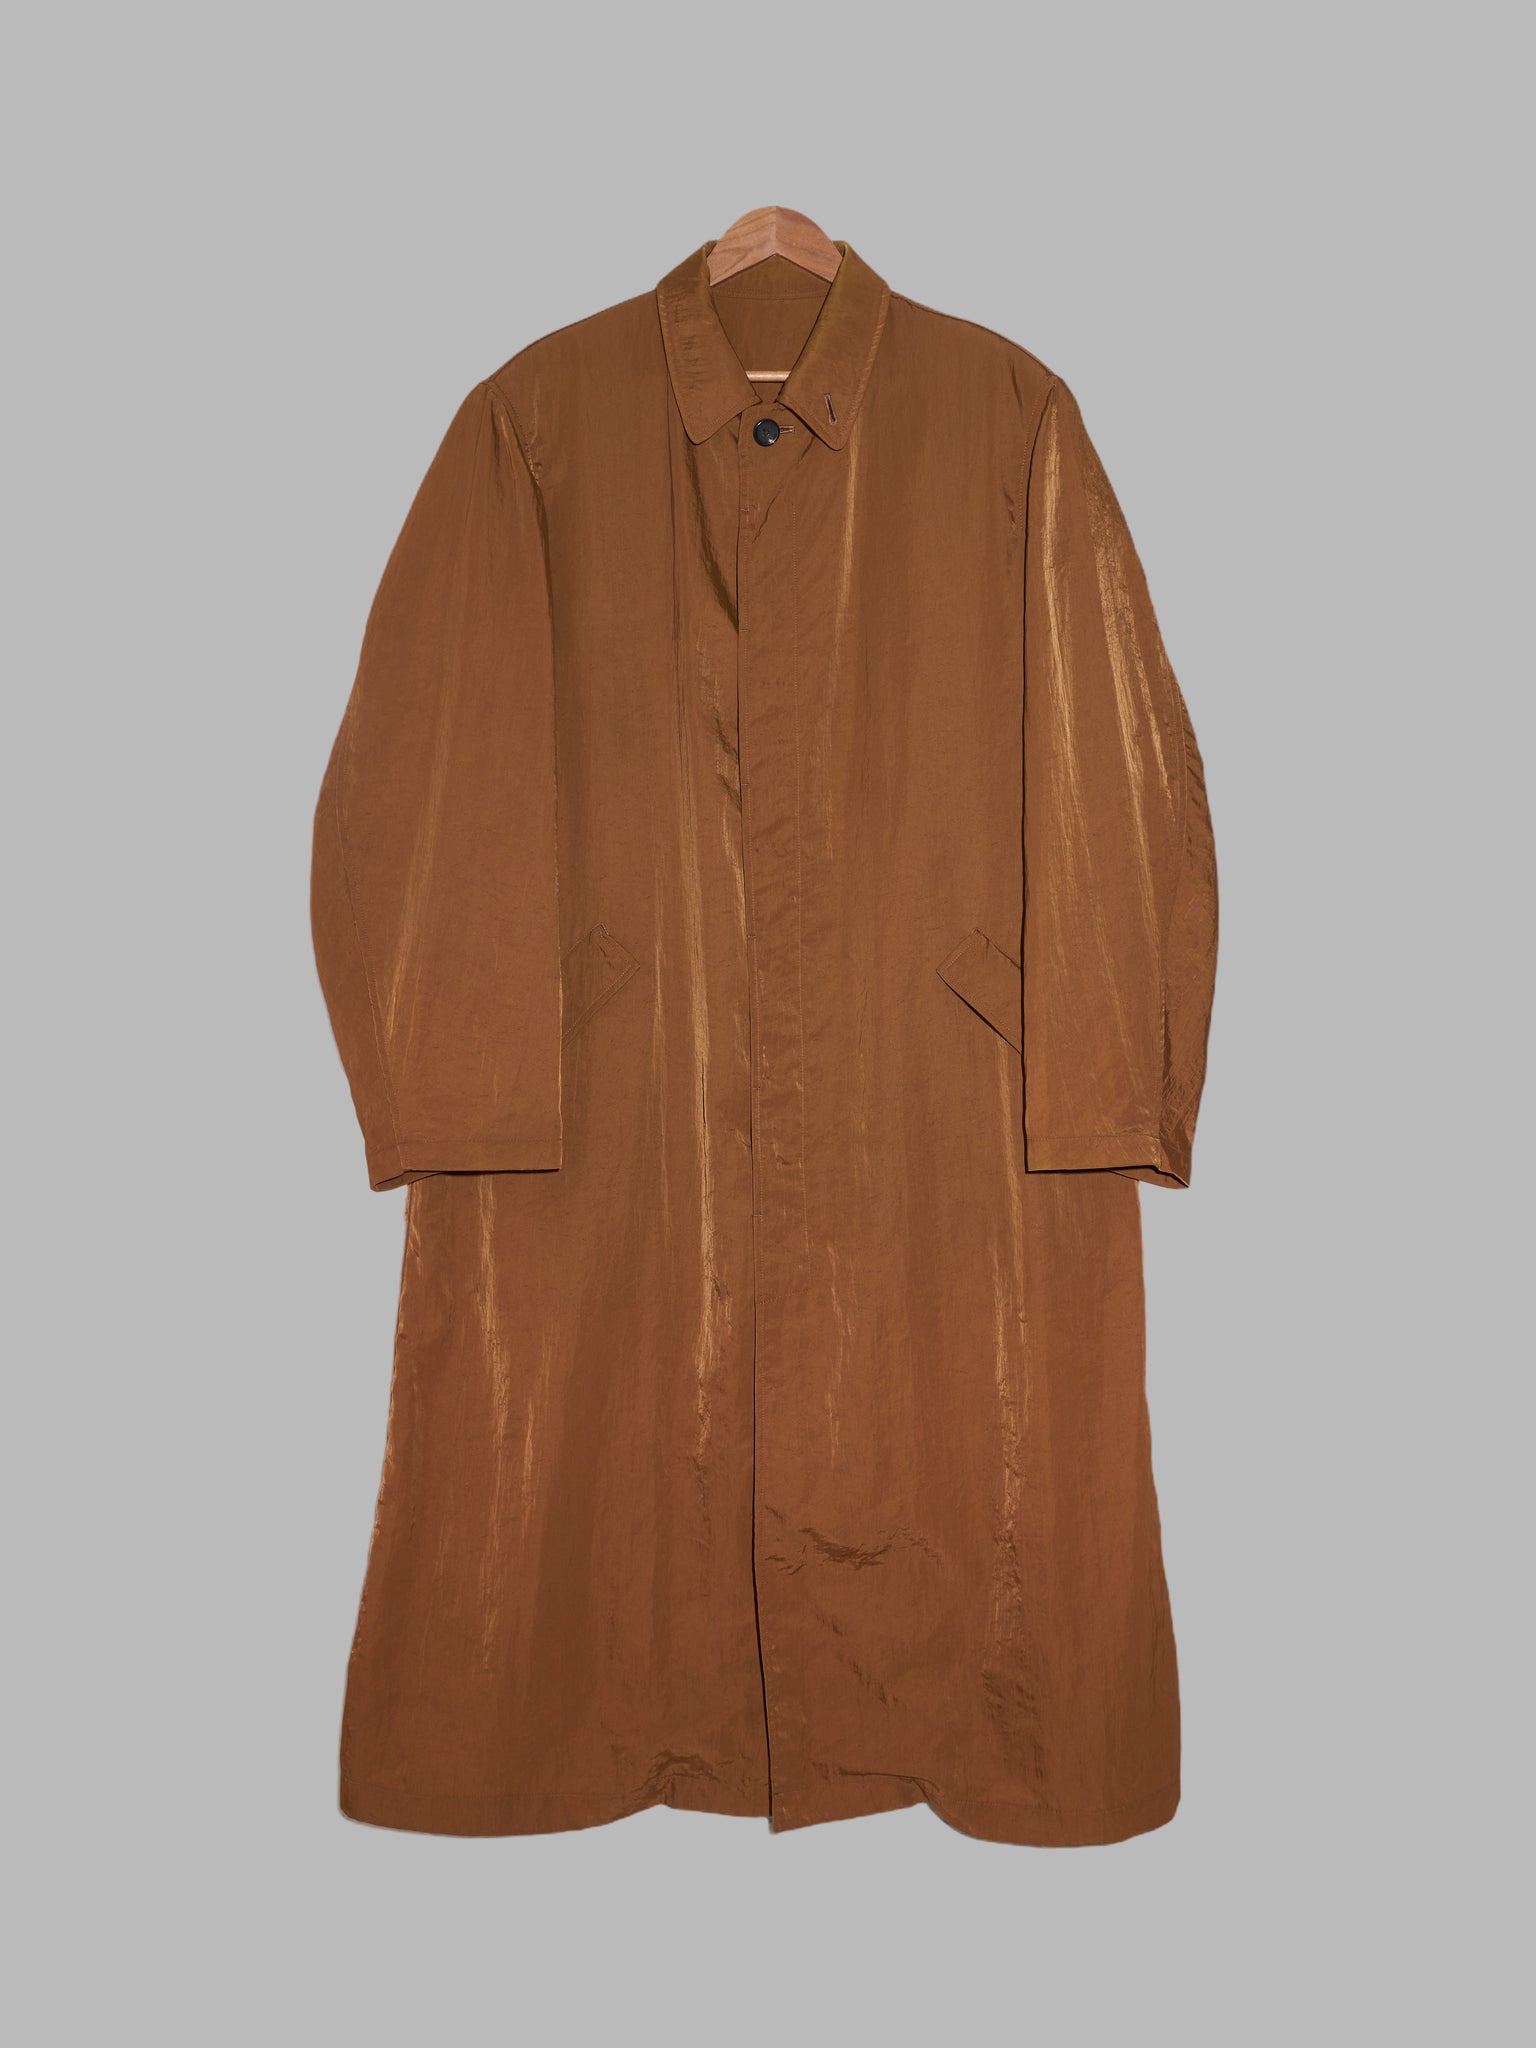 Y's for Men Yohji Yamamoto 1980s brown creased nylon mackintosh coat - L M